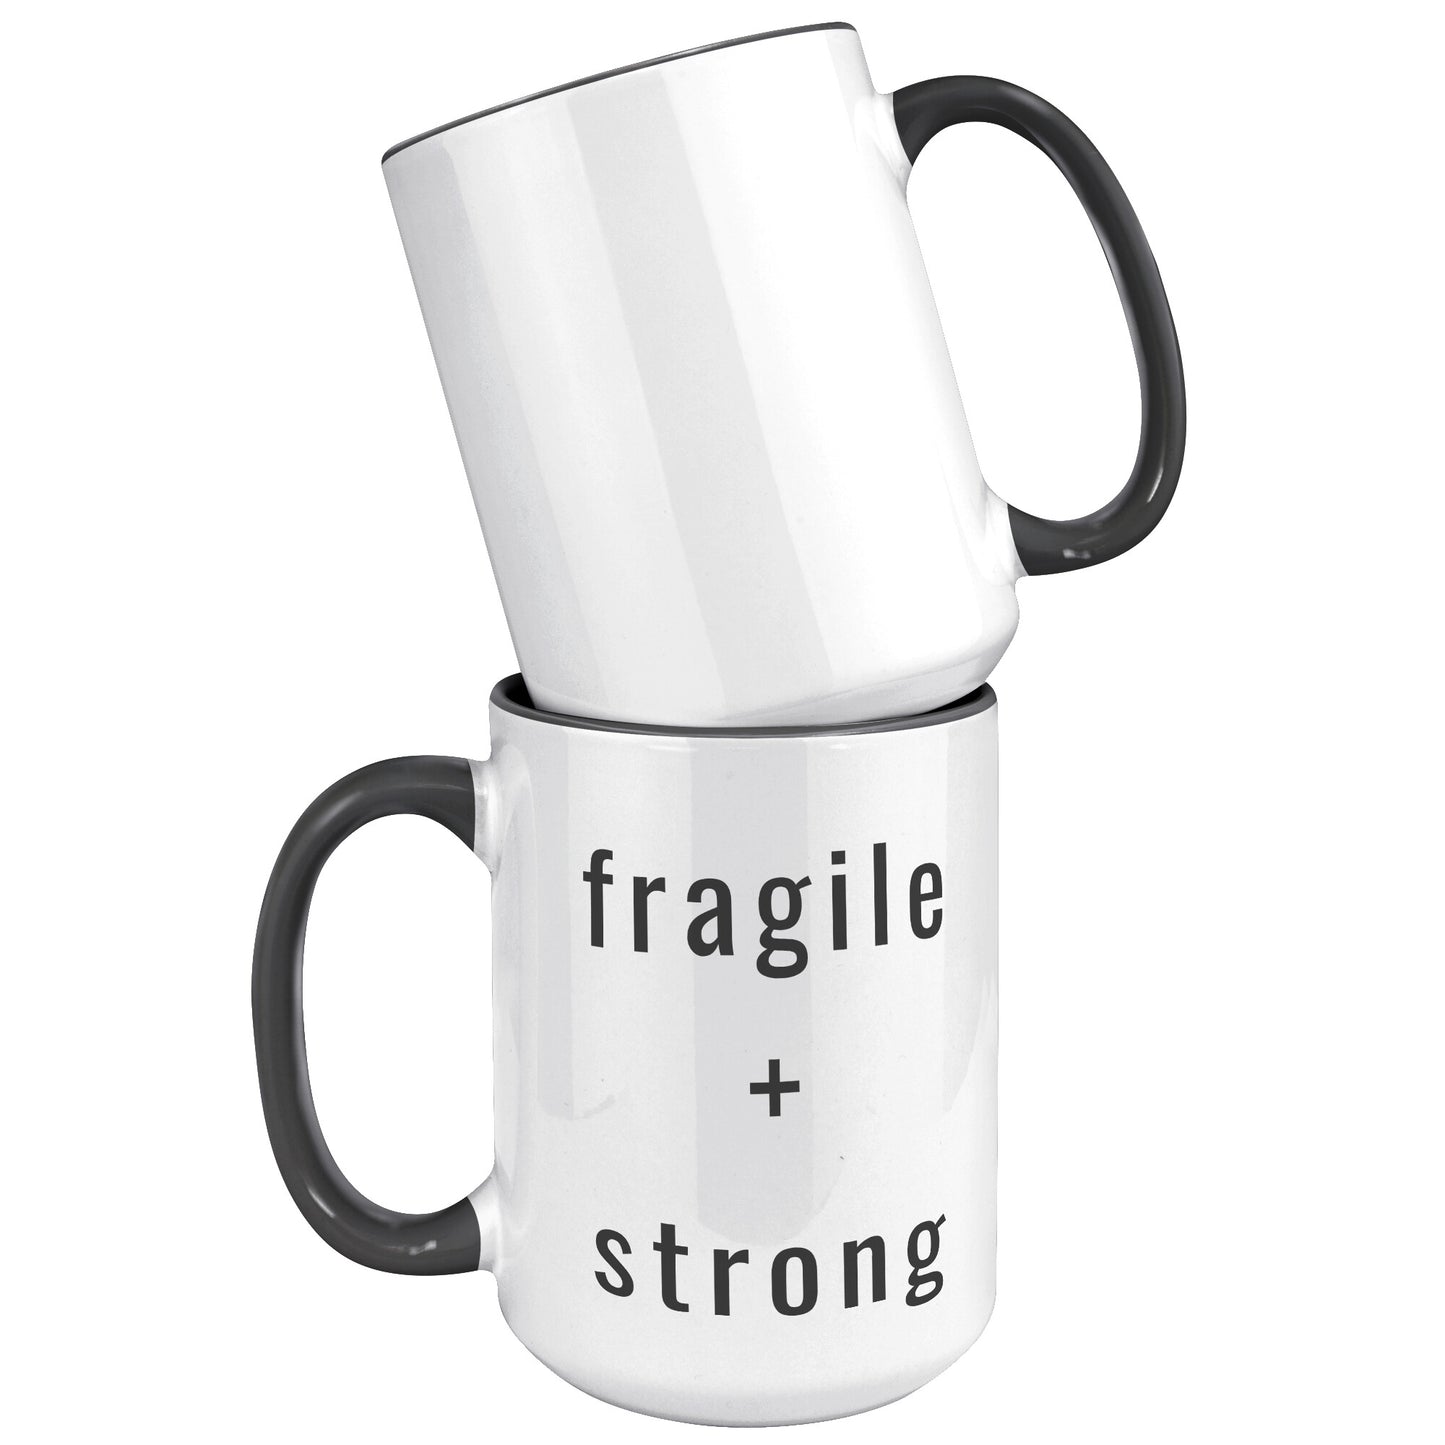 enCOURAGEher {fragile + strong} mug